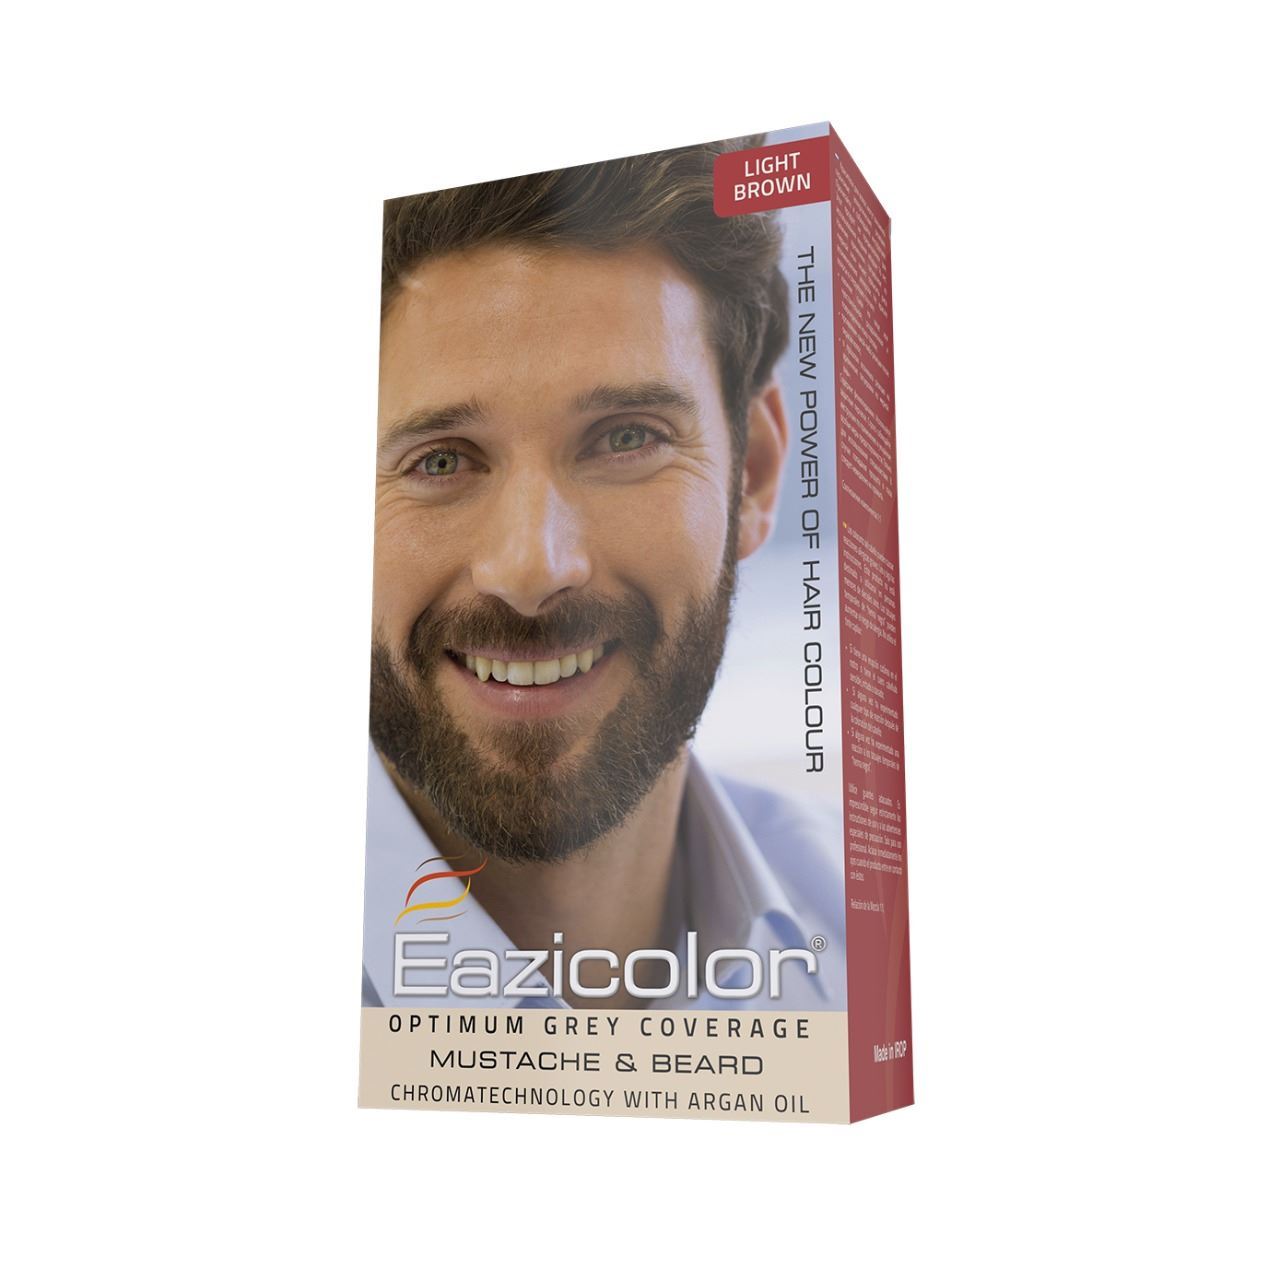 Sikos- Eazicolor For Men Mustache & Beard Light Brown ()